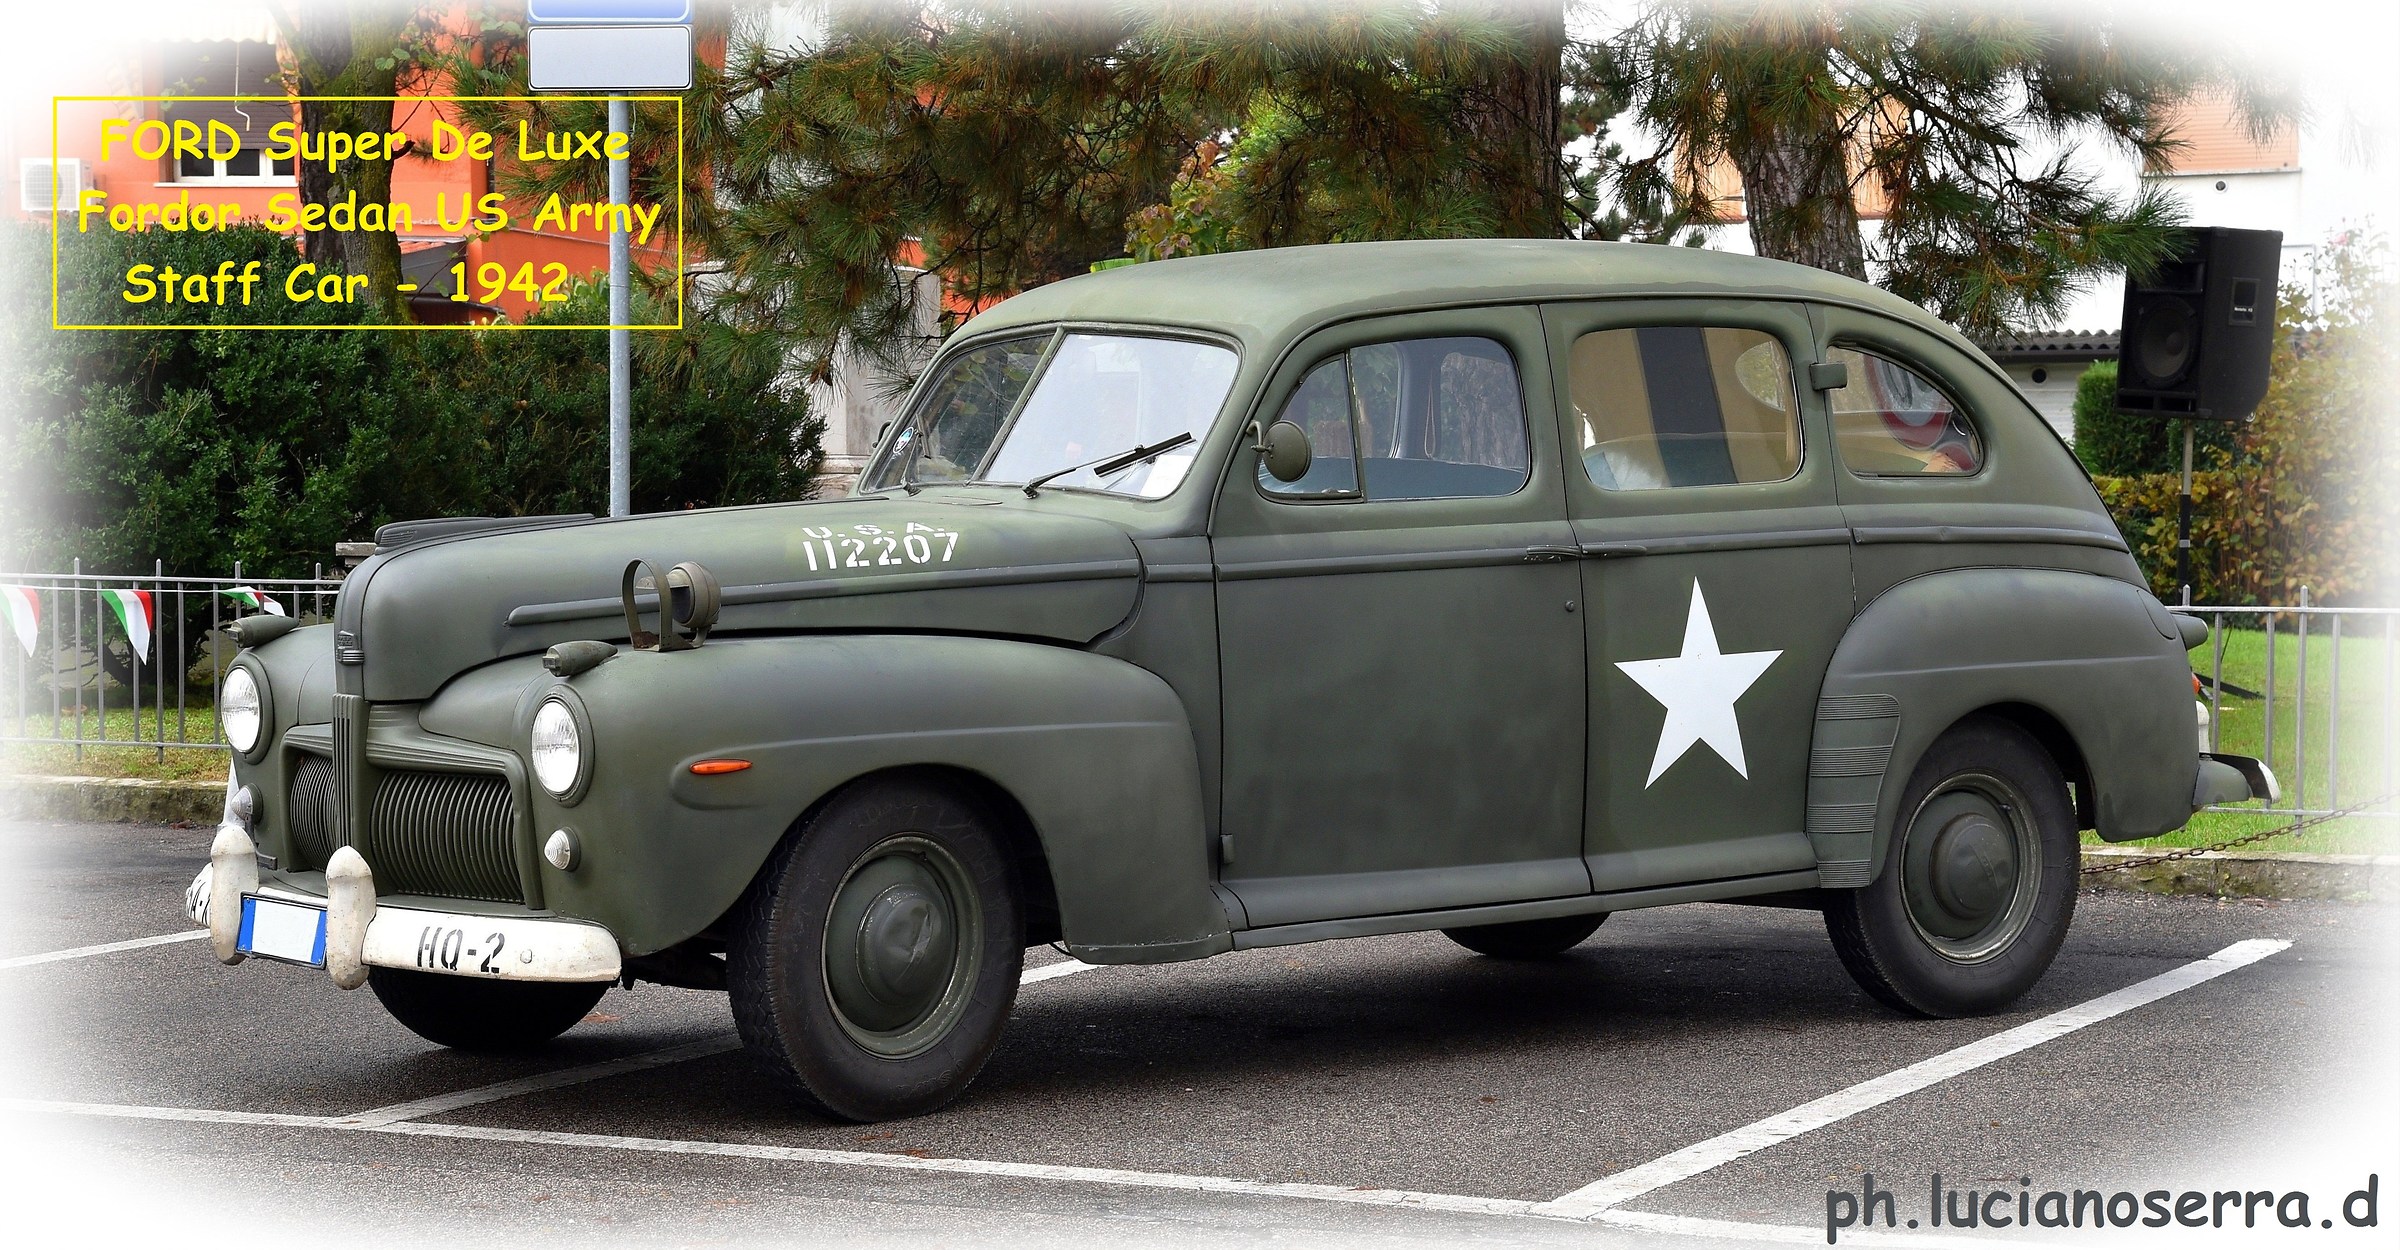 Ford Super Deluxe Sedan Fordor US Army Staff Car -1942...